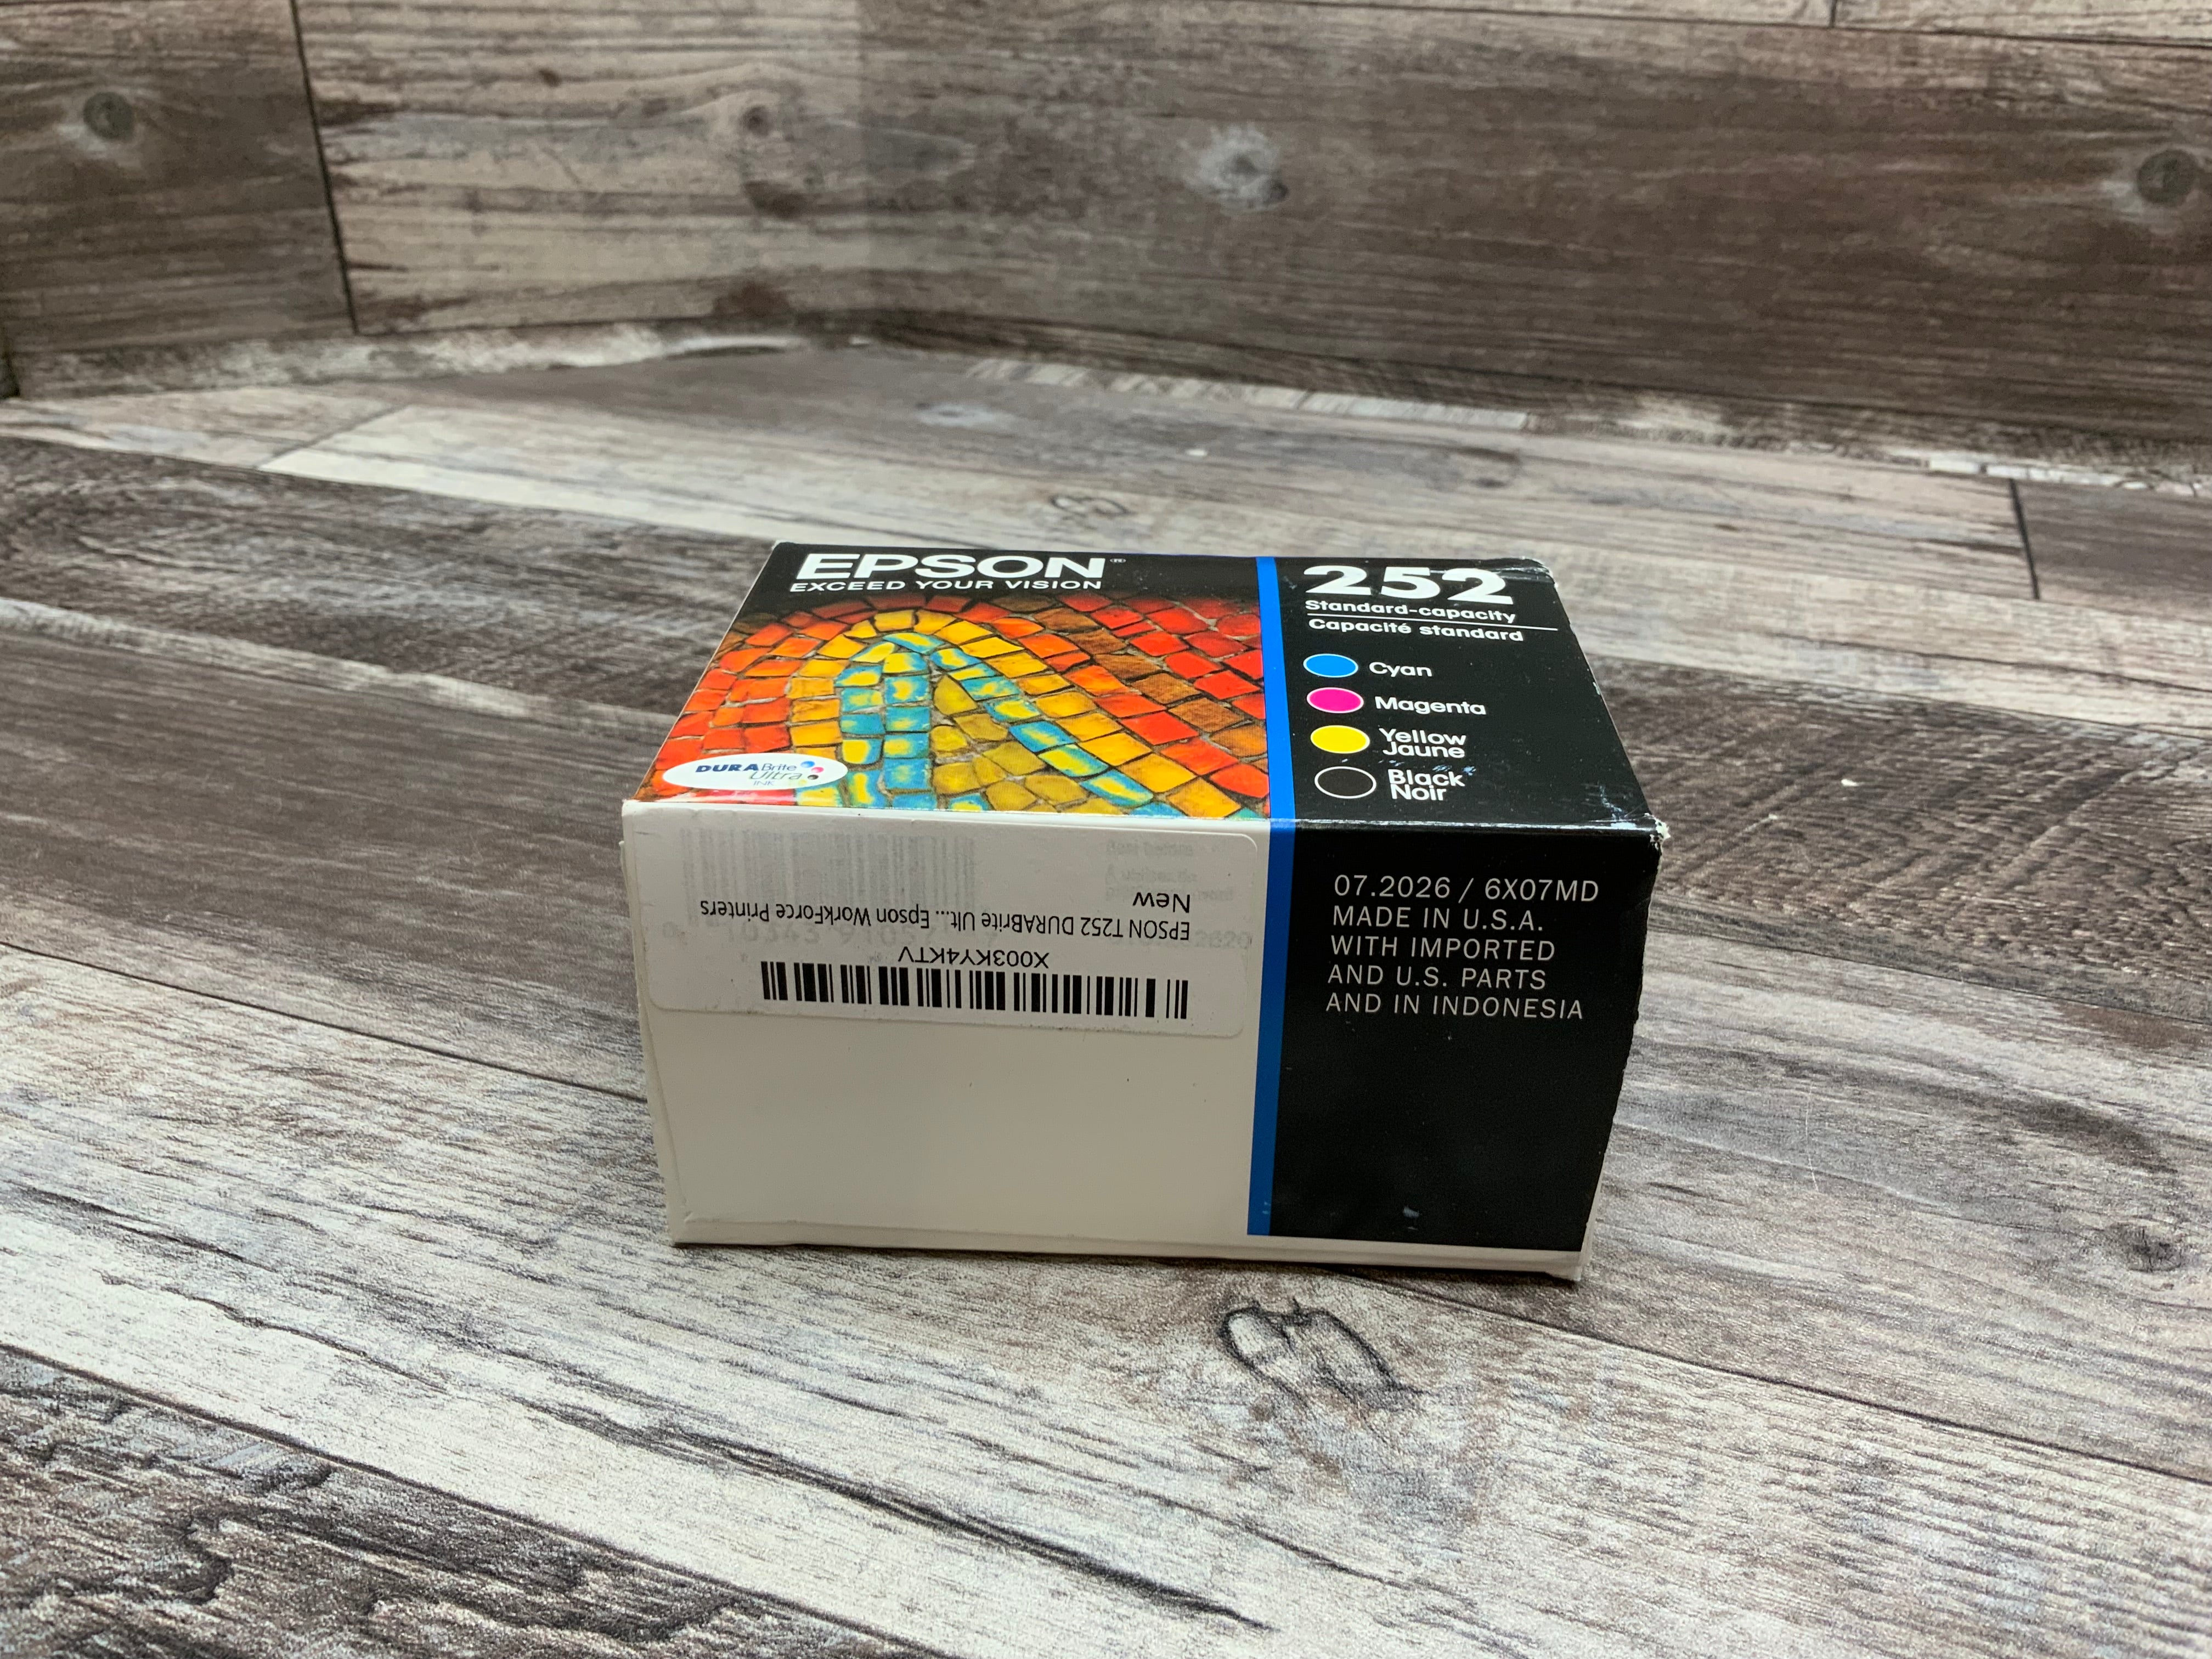 Epson DURABrite T252120-BCS Black/Cyan/Magenta/Yellow Ink Cartridge (8079122694382)